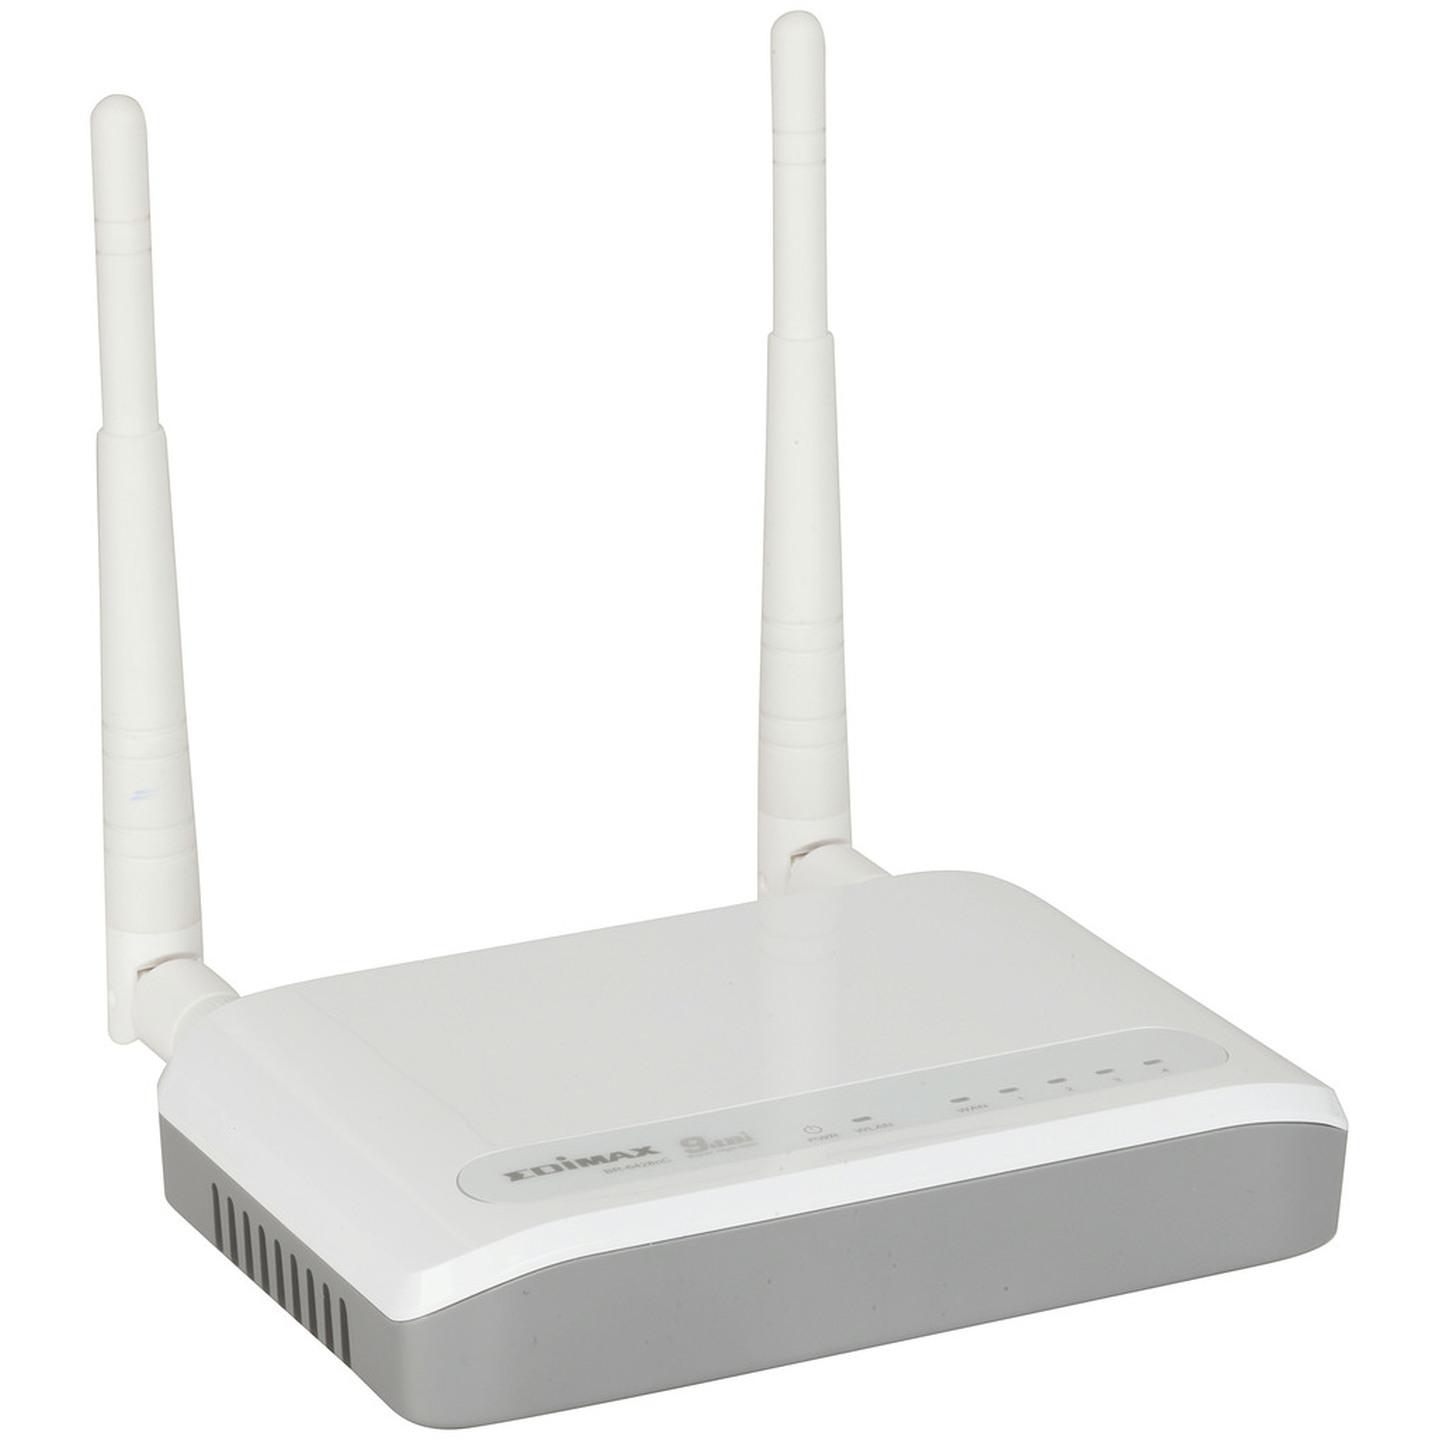 Wireless N300 Broadband Router